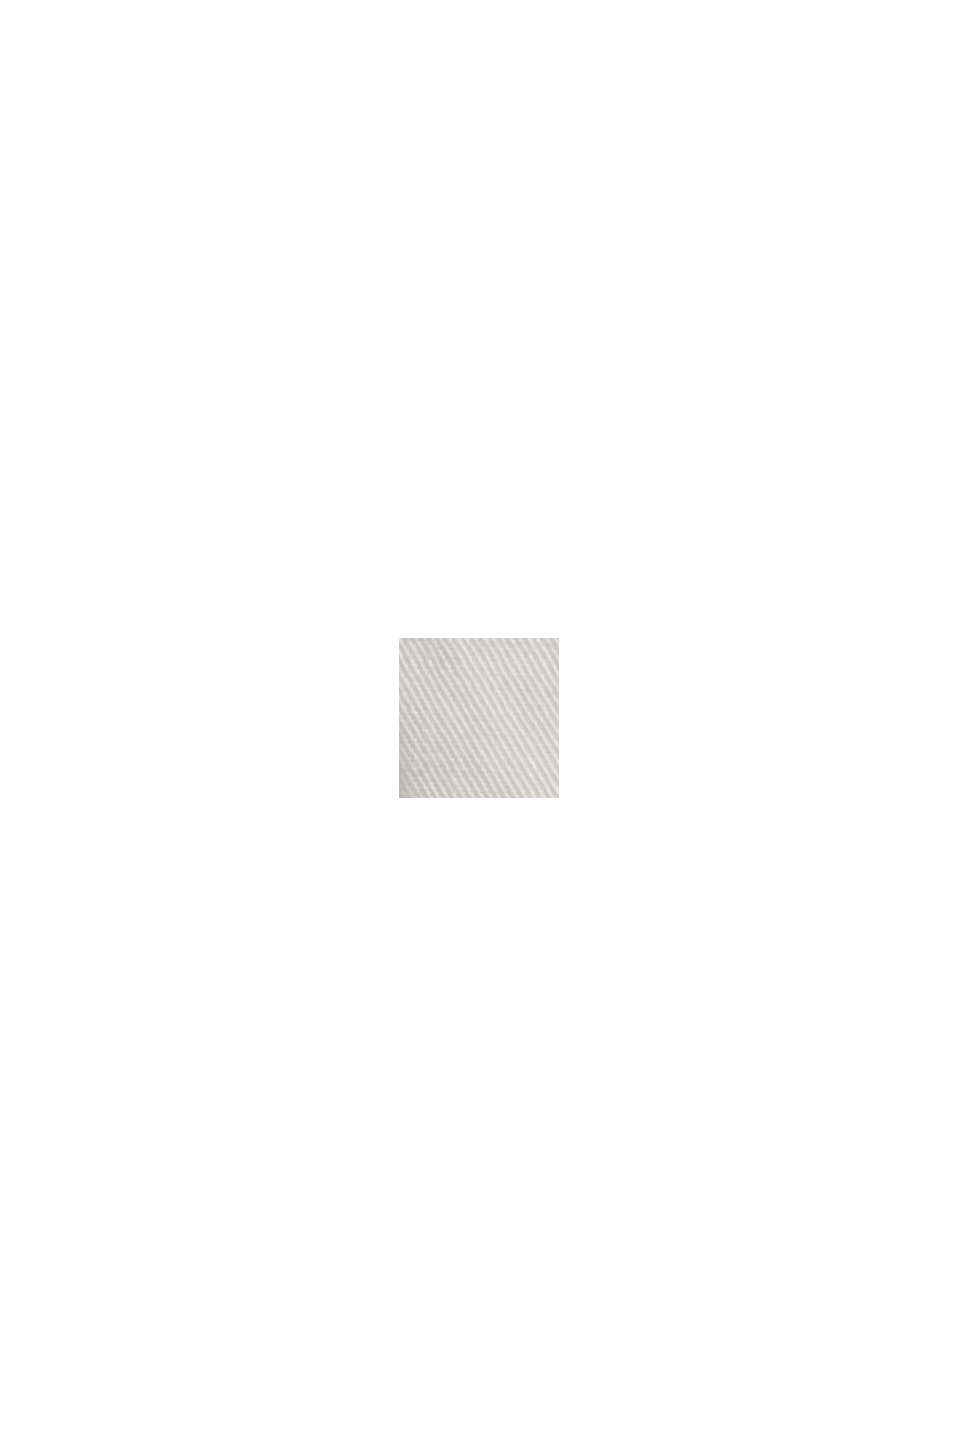 Pantalón chino tobillero en 100 % algodón, WHITE, swatch